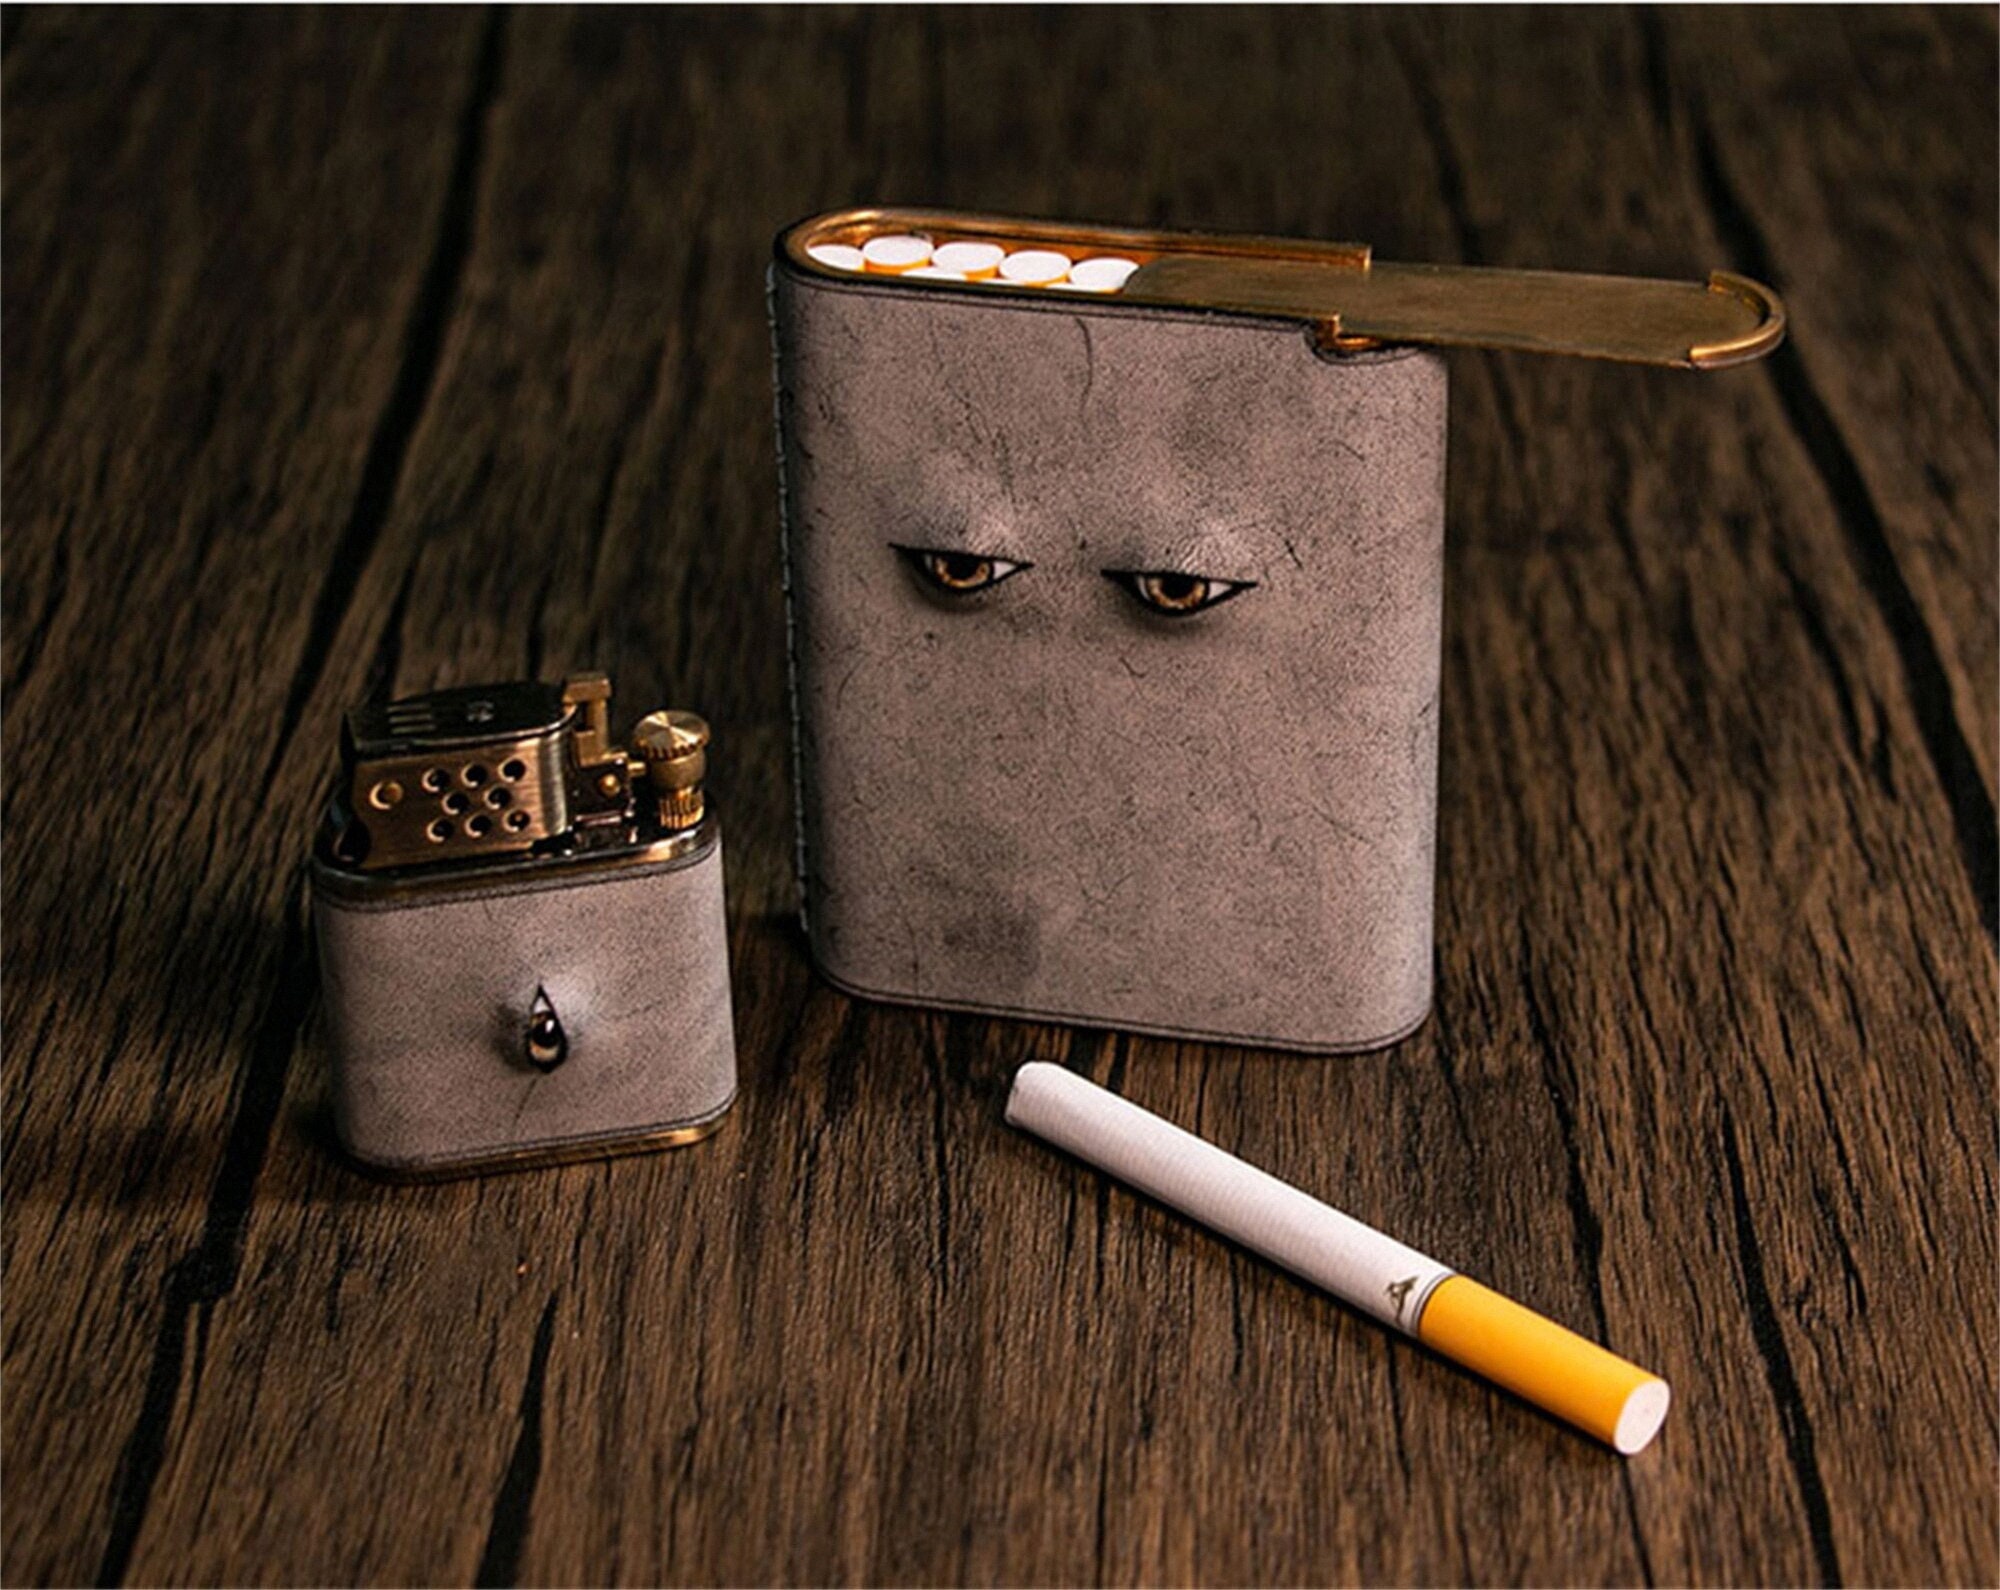  Small Unique Cigarette Case Vintage Cigarette Case  Leather+Wooden Cigarette Case Flip Open Design Regular Can Hold 20  Cigarettes Handmade : Health & Household